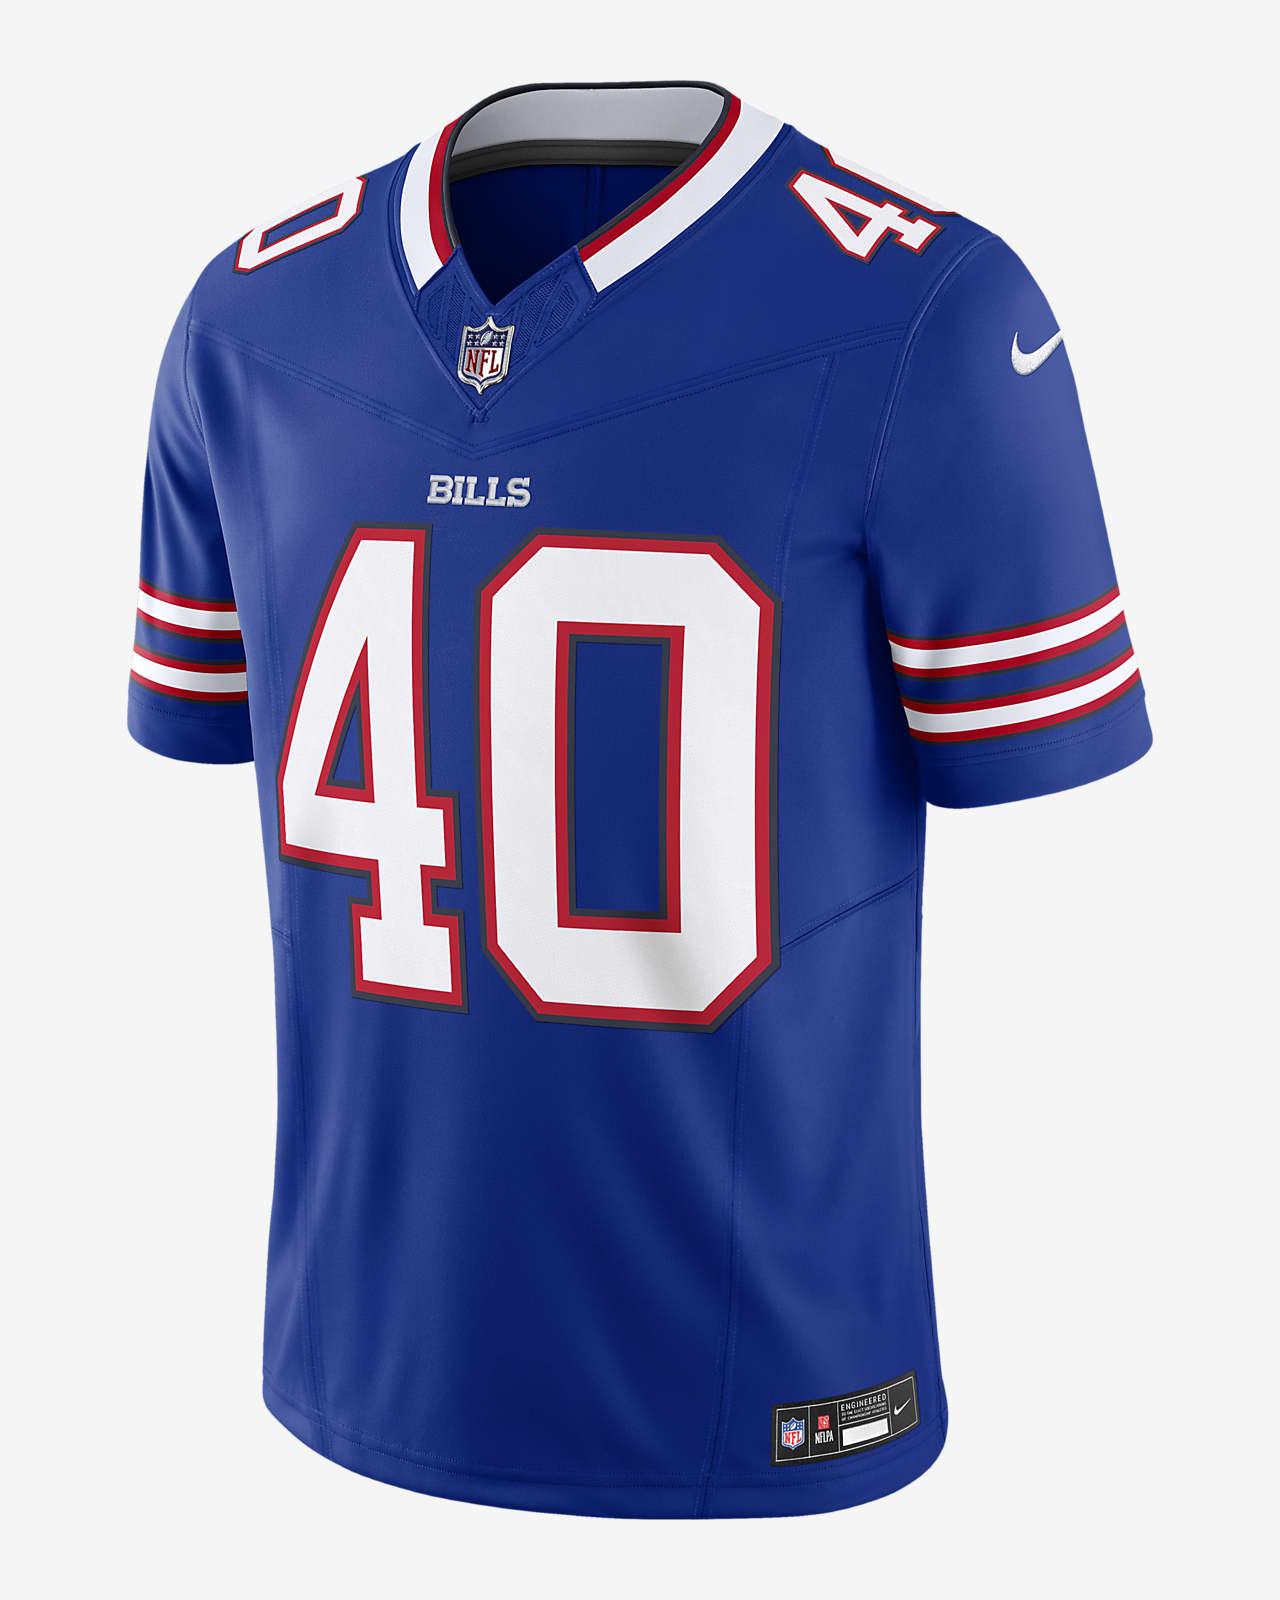 Jersey de fútbol americano Nike Dri-FIT NFL Limited para hombre Von Miller Buffalo Bills